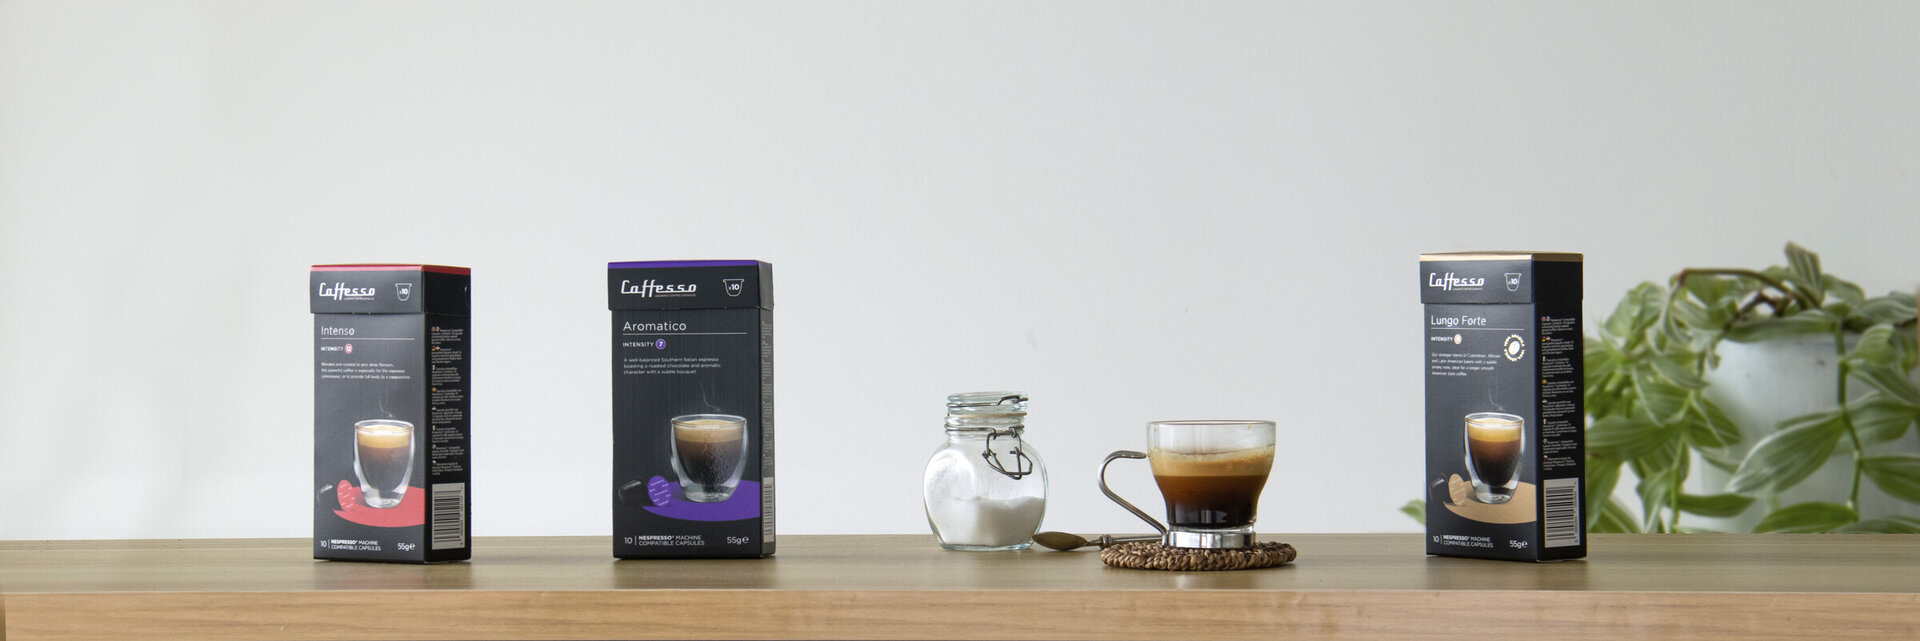 Nespresso's Vertuo Pop shrinks the easy coffee maker, adds expert